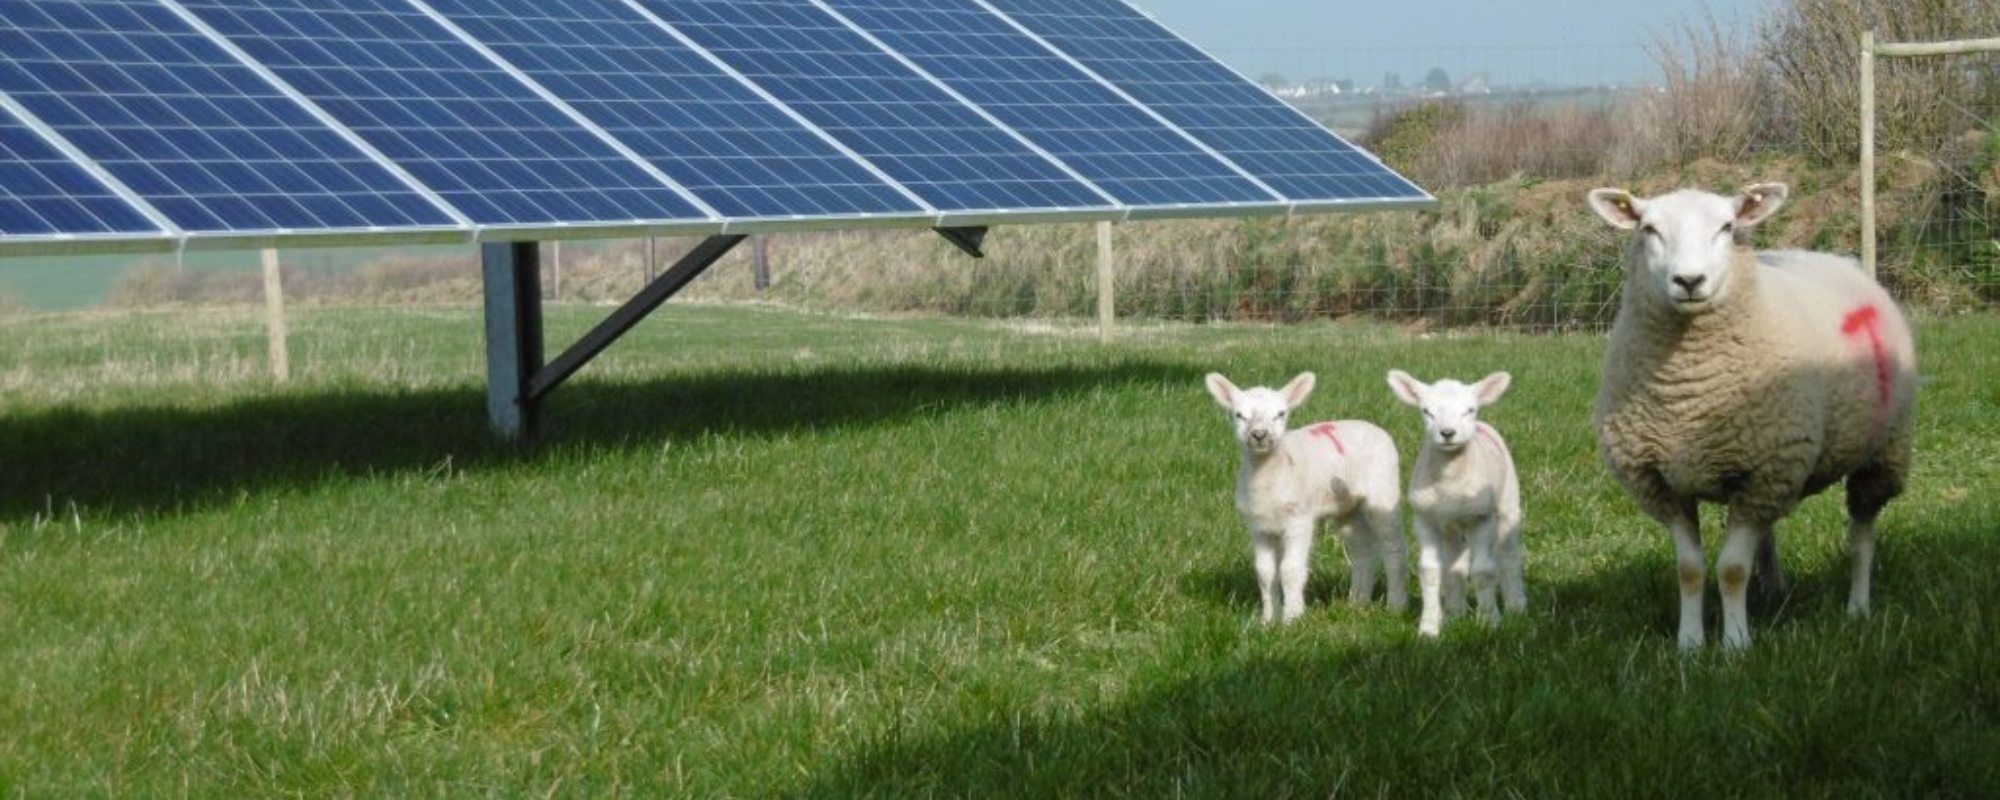 sheep beside solar panel